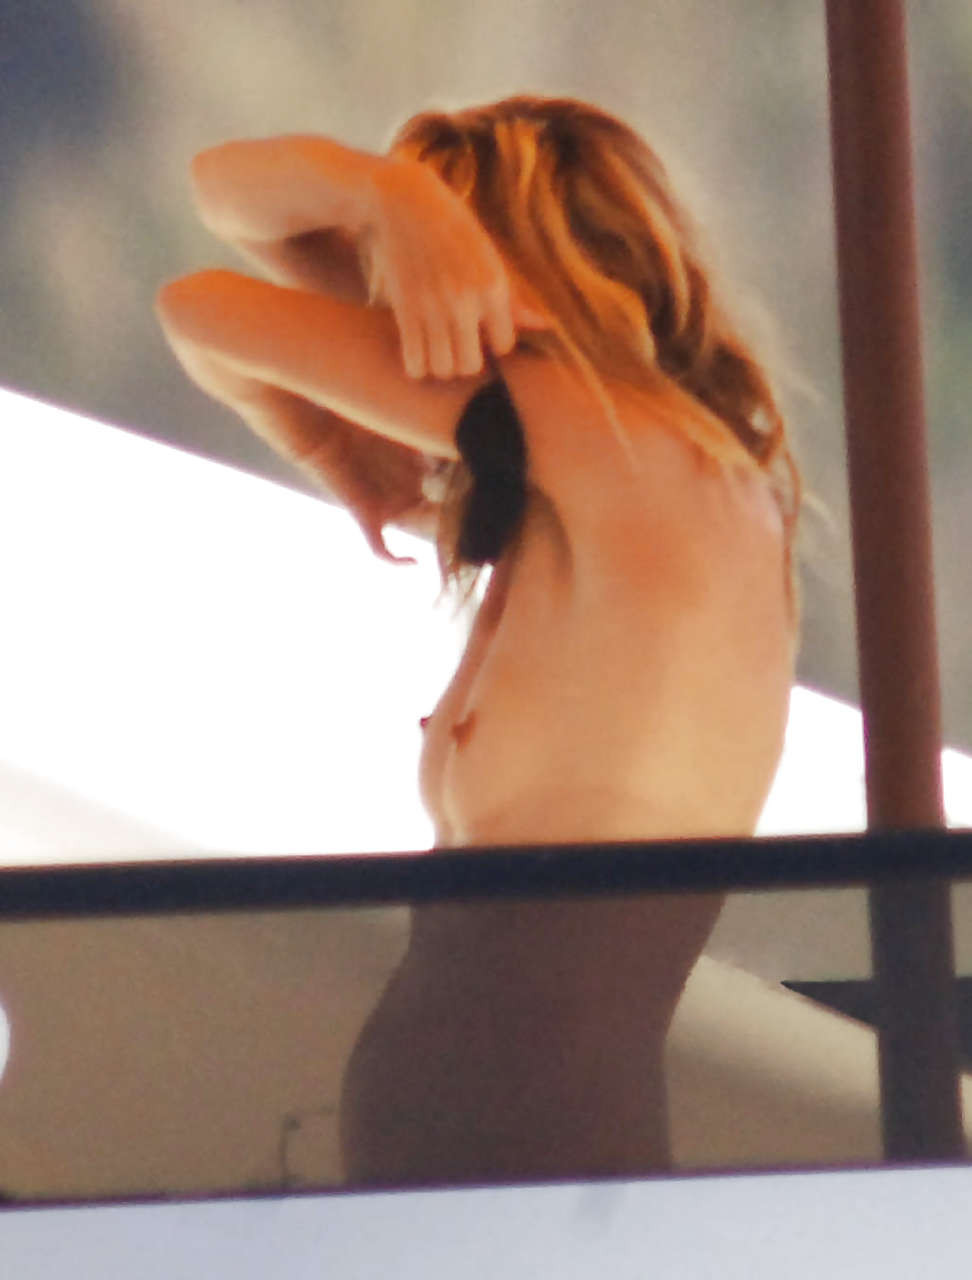 Heidi Klum caught enjoy sunbathing topless on yacht by paprazzi and posing sexy #75295183